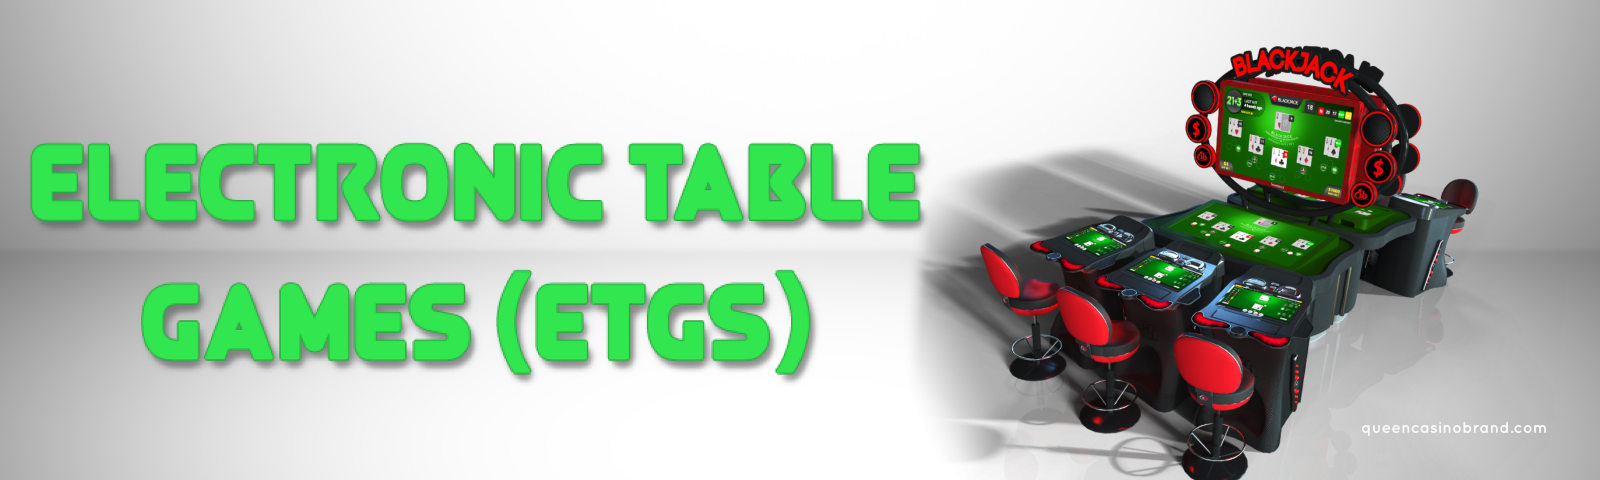 Electronic Table Games Casino (ETGs) - Queen Casino Brand